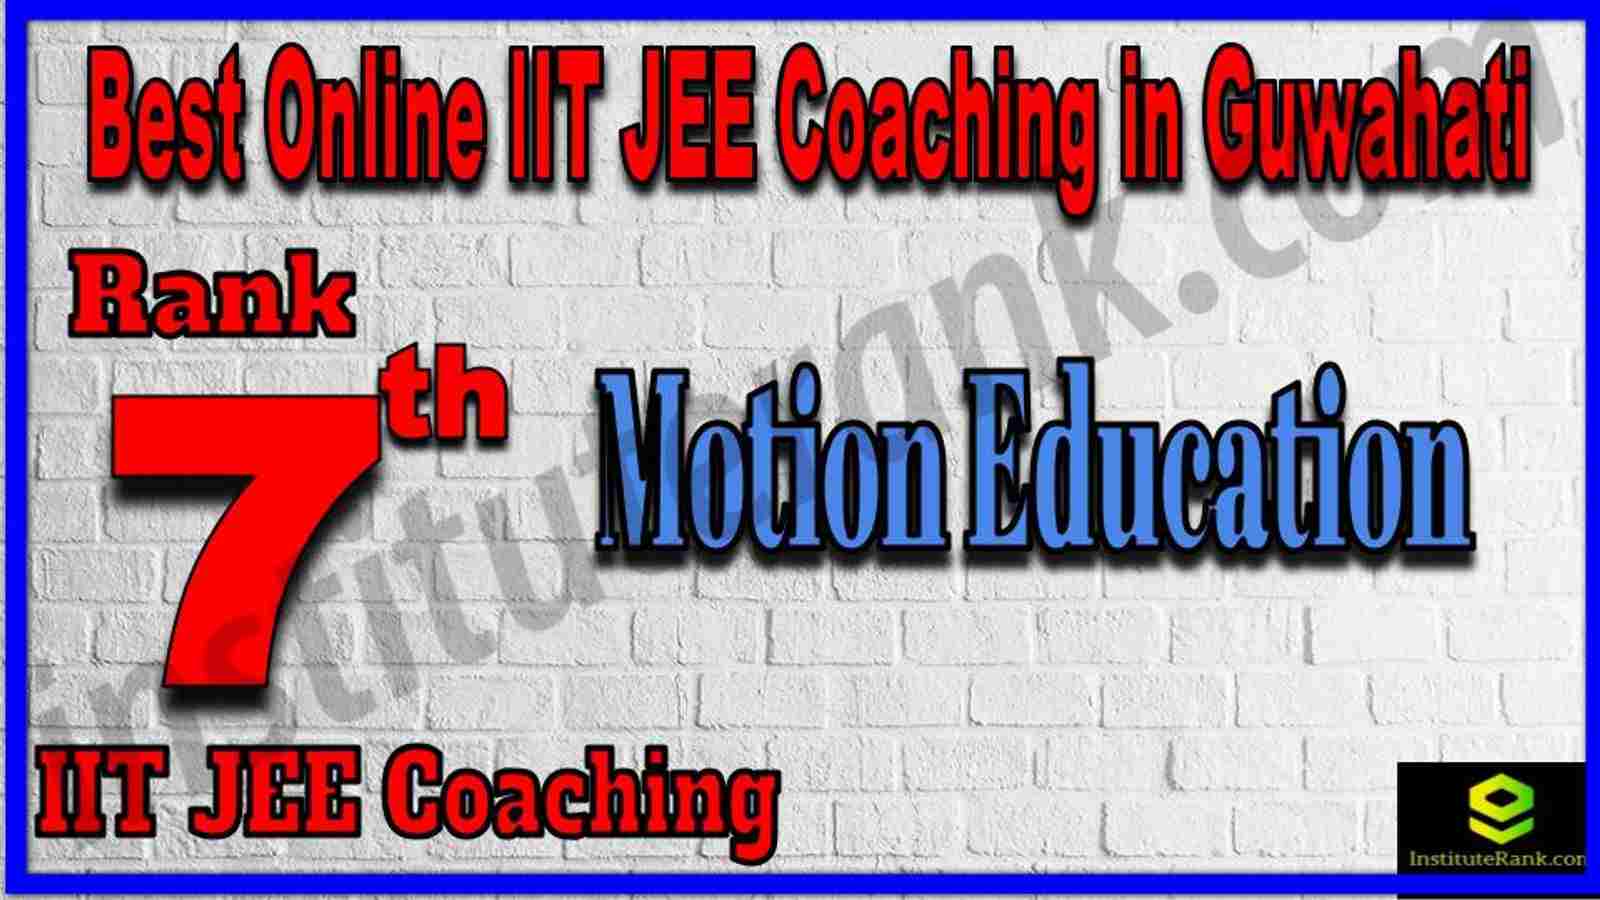 Rank 7th Best Online IIT JEE Coaching in Guwahati